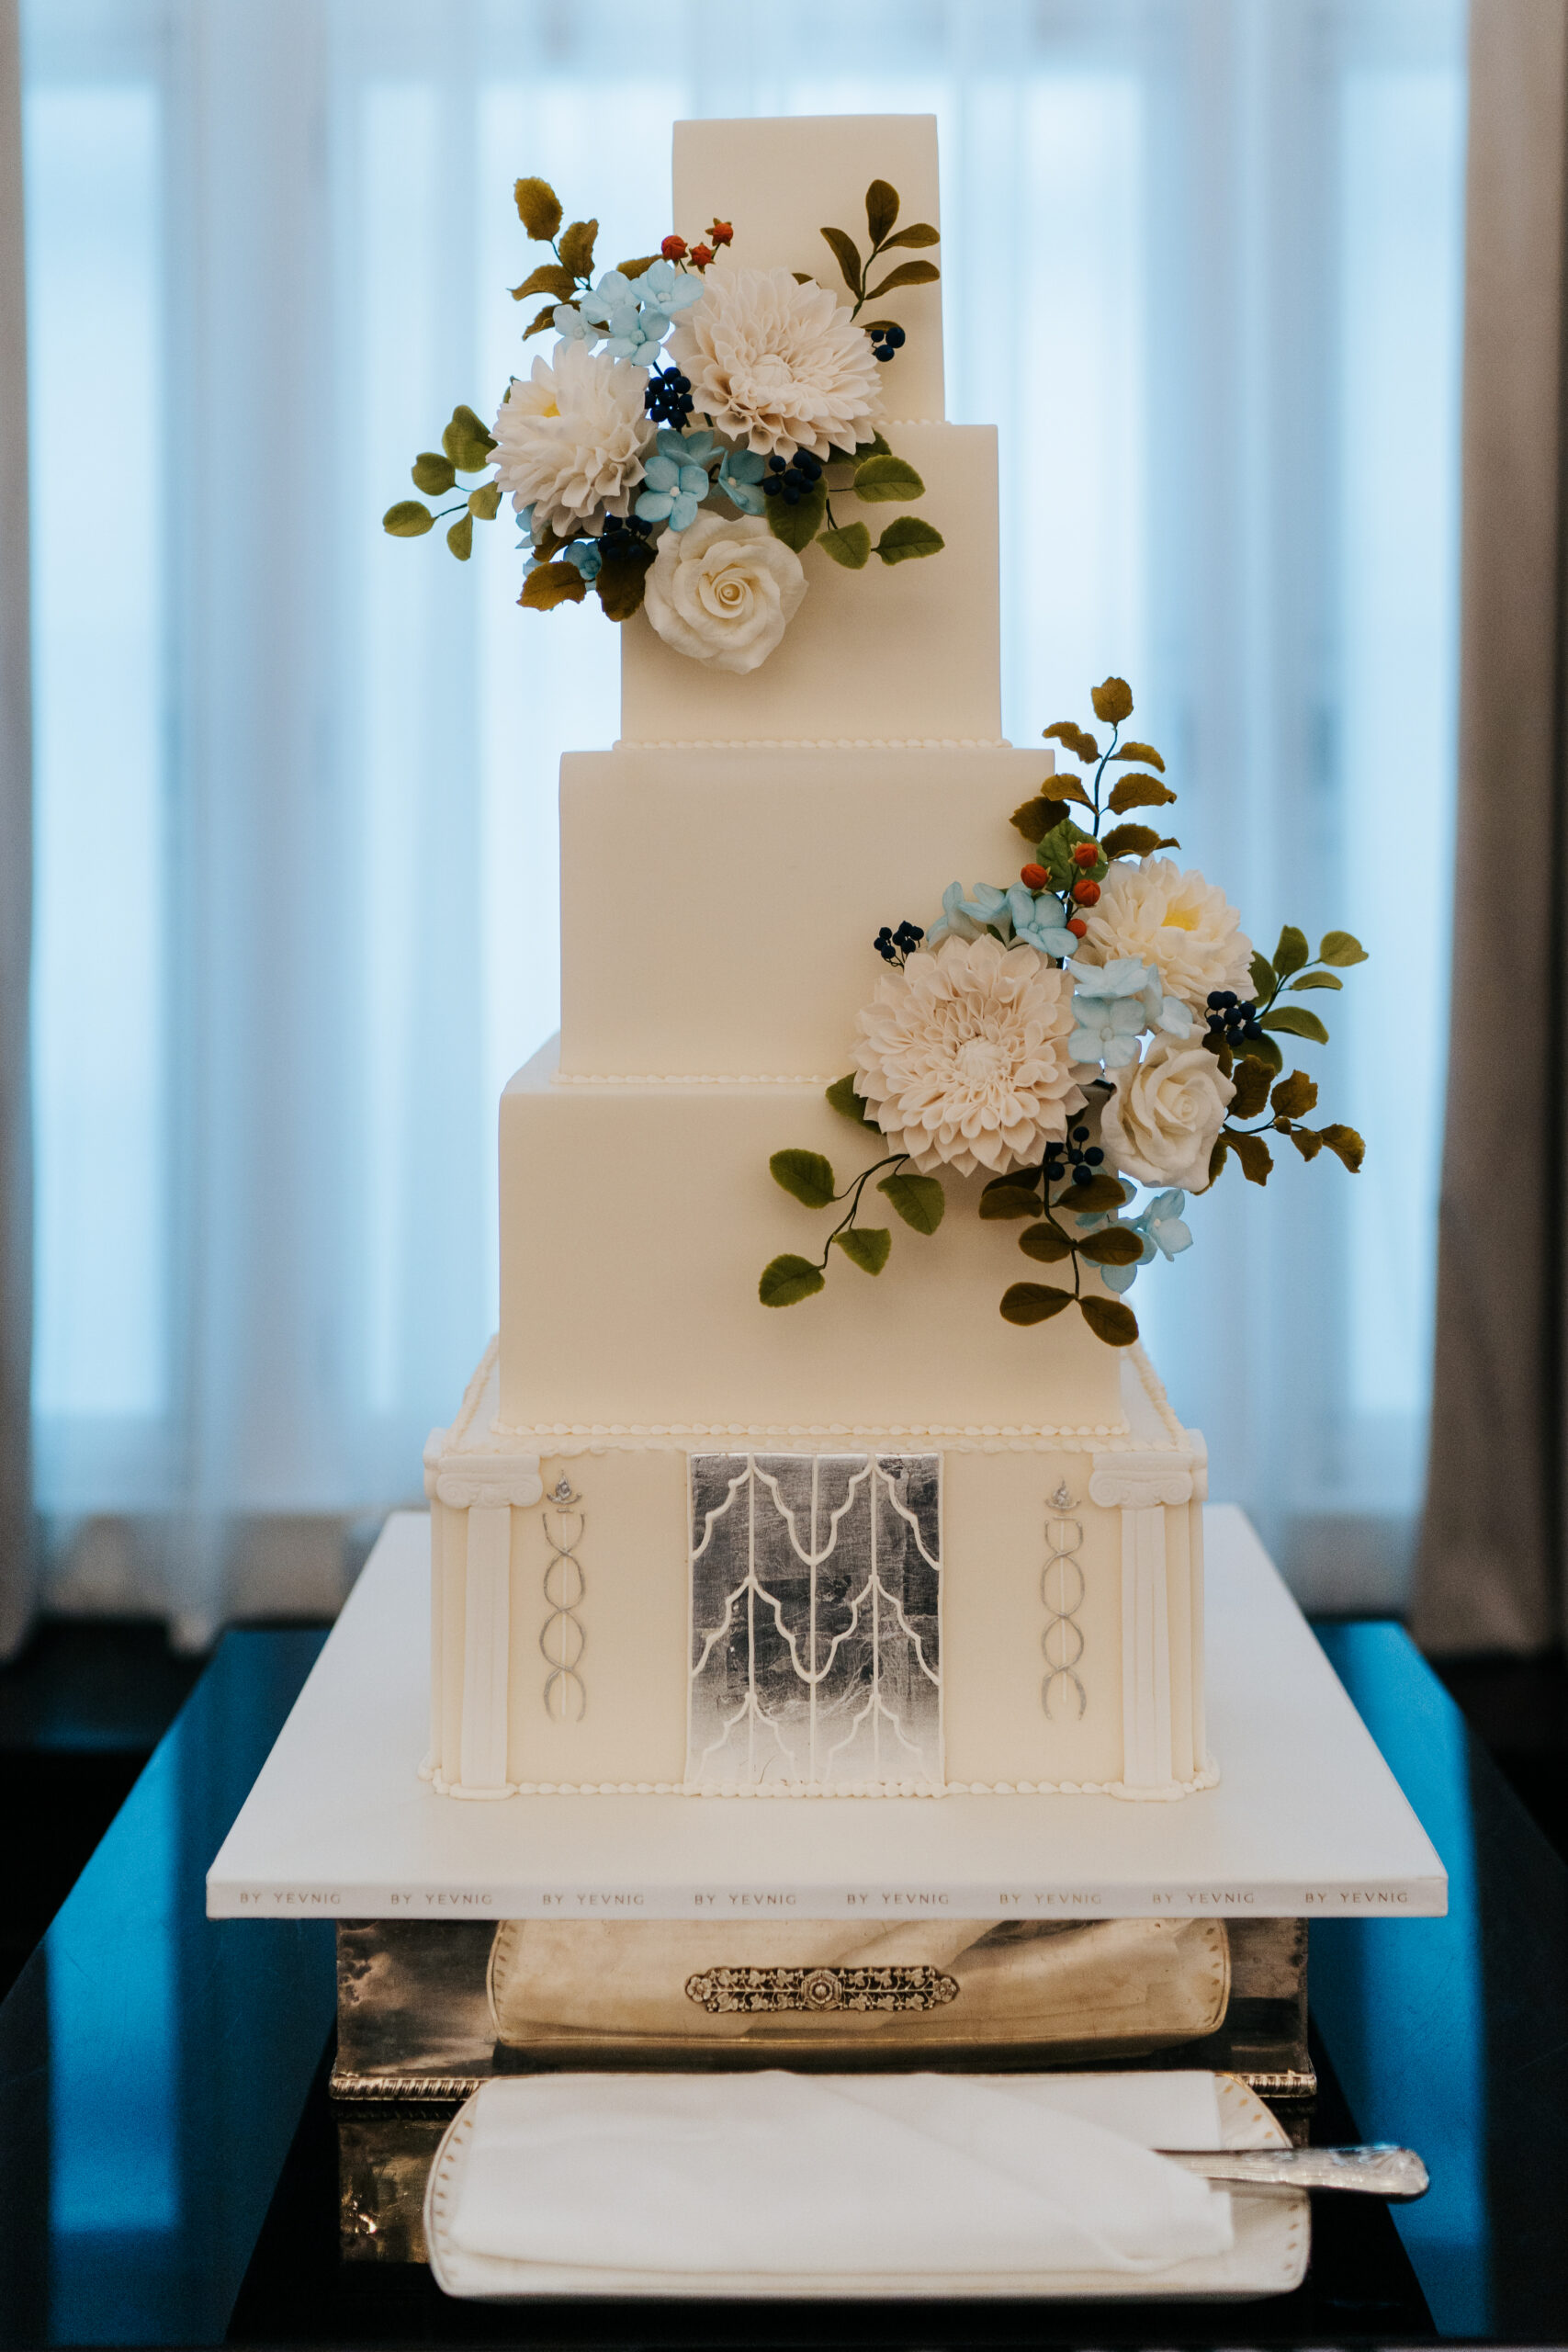 Art Deco luxury By Yevnig wedding cake inspired by Claridge's Hotel